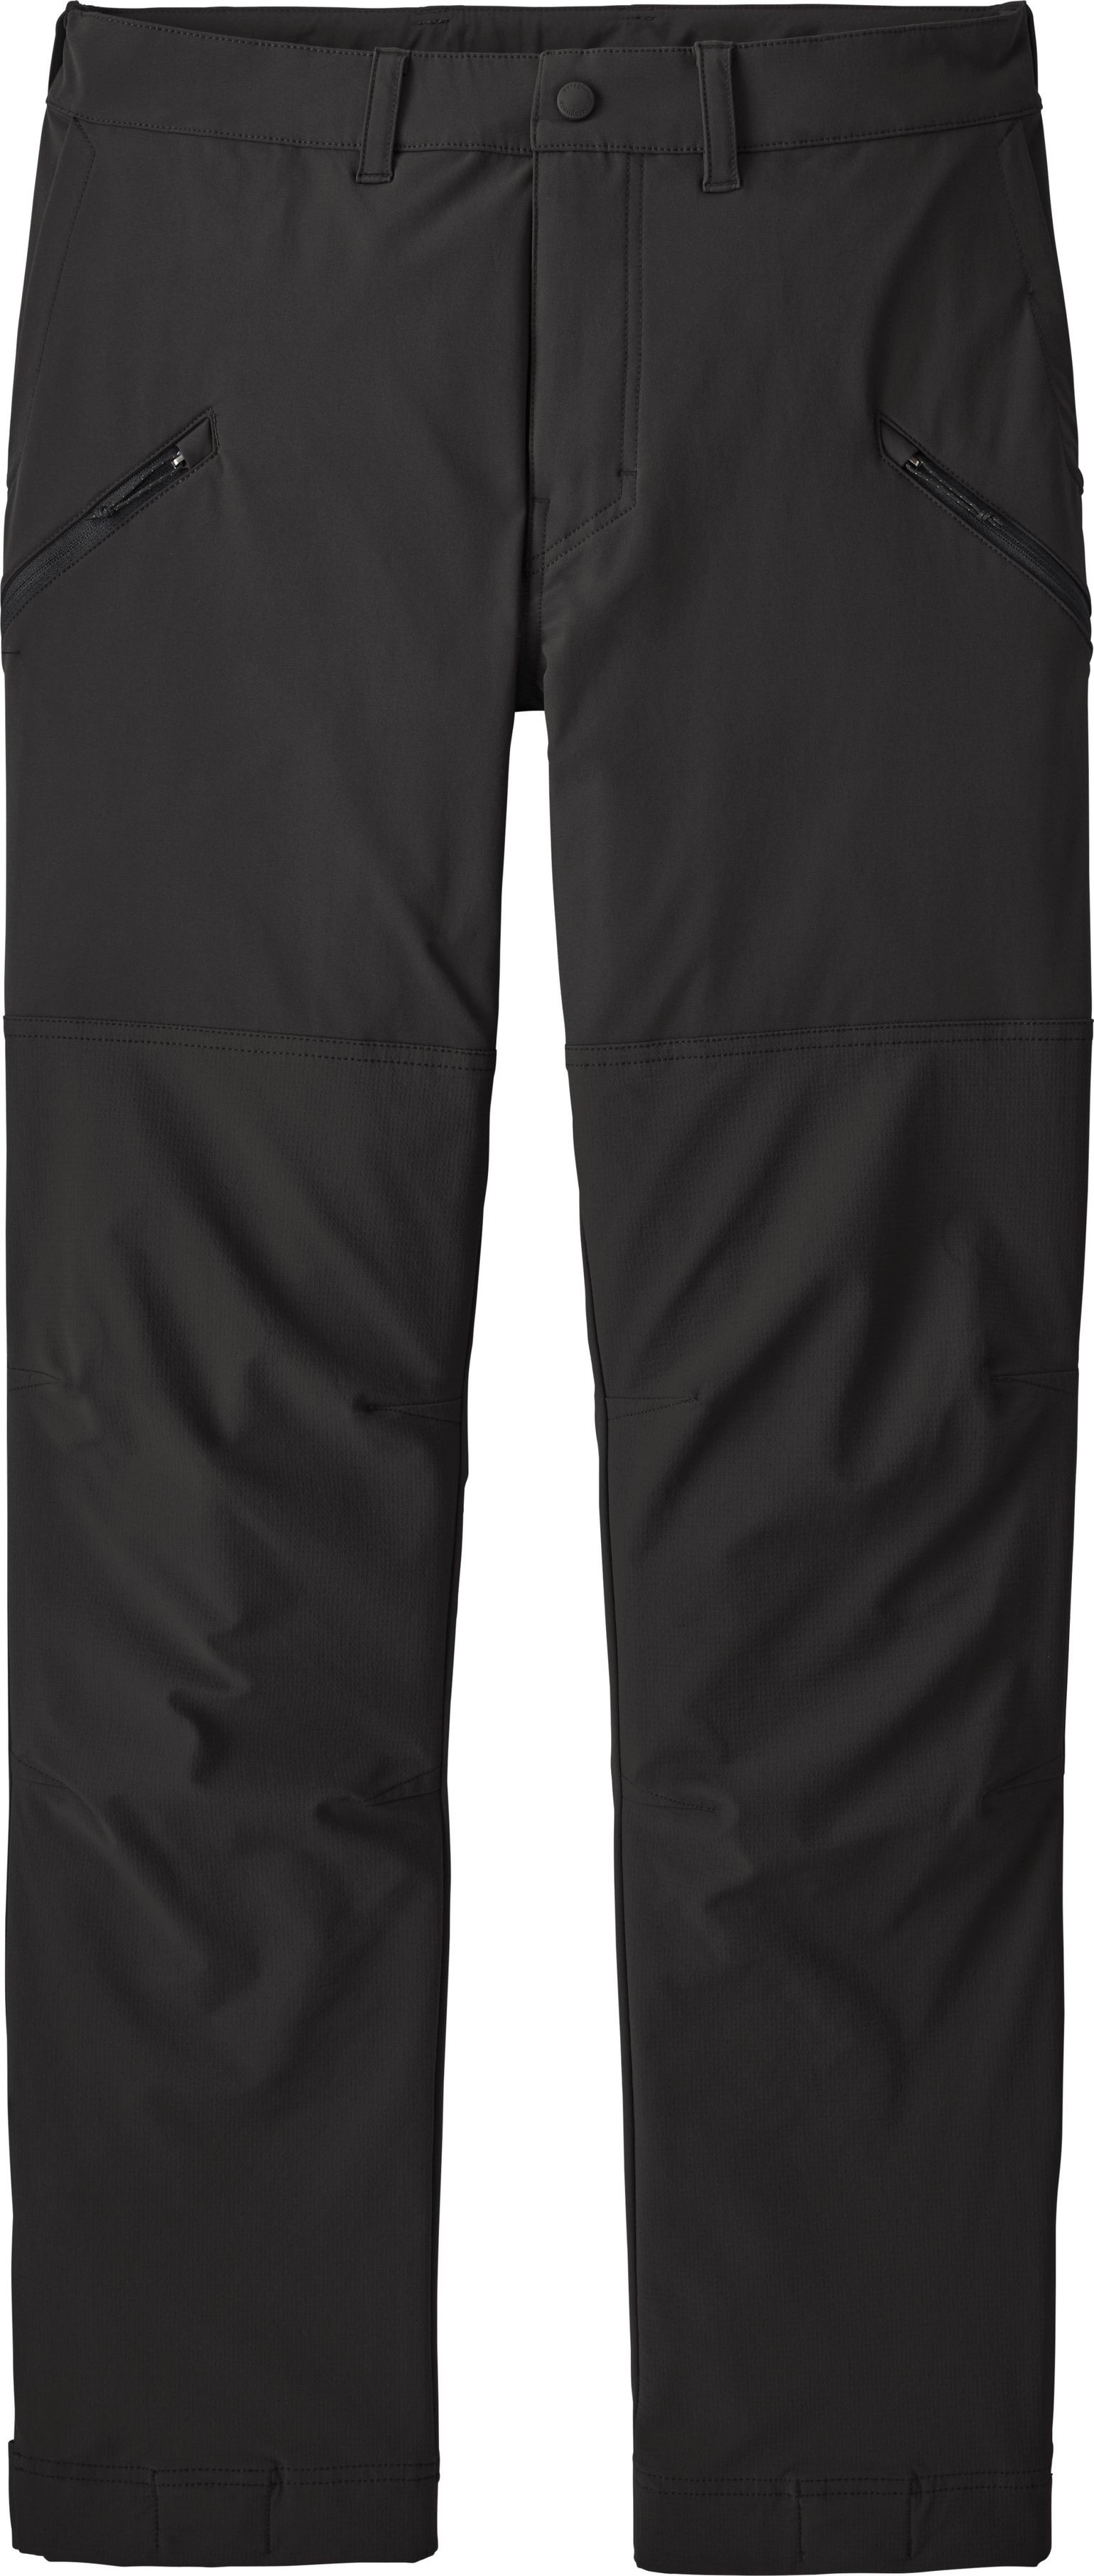 Men's Point Peak Trail Pants - Regular Black